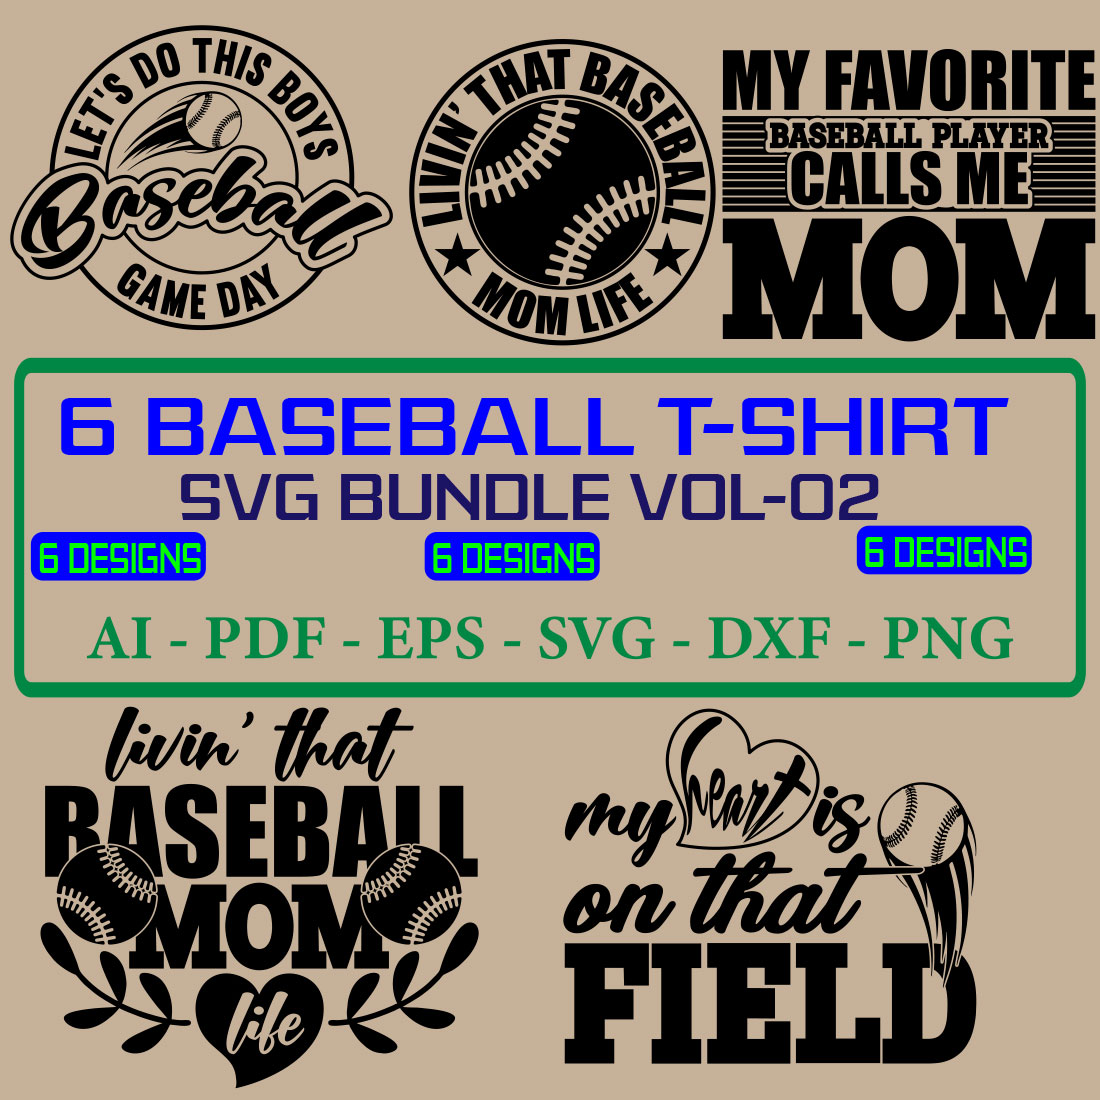 5 Baseball T-shirt SVG Bundle Vol 03 cover image.